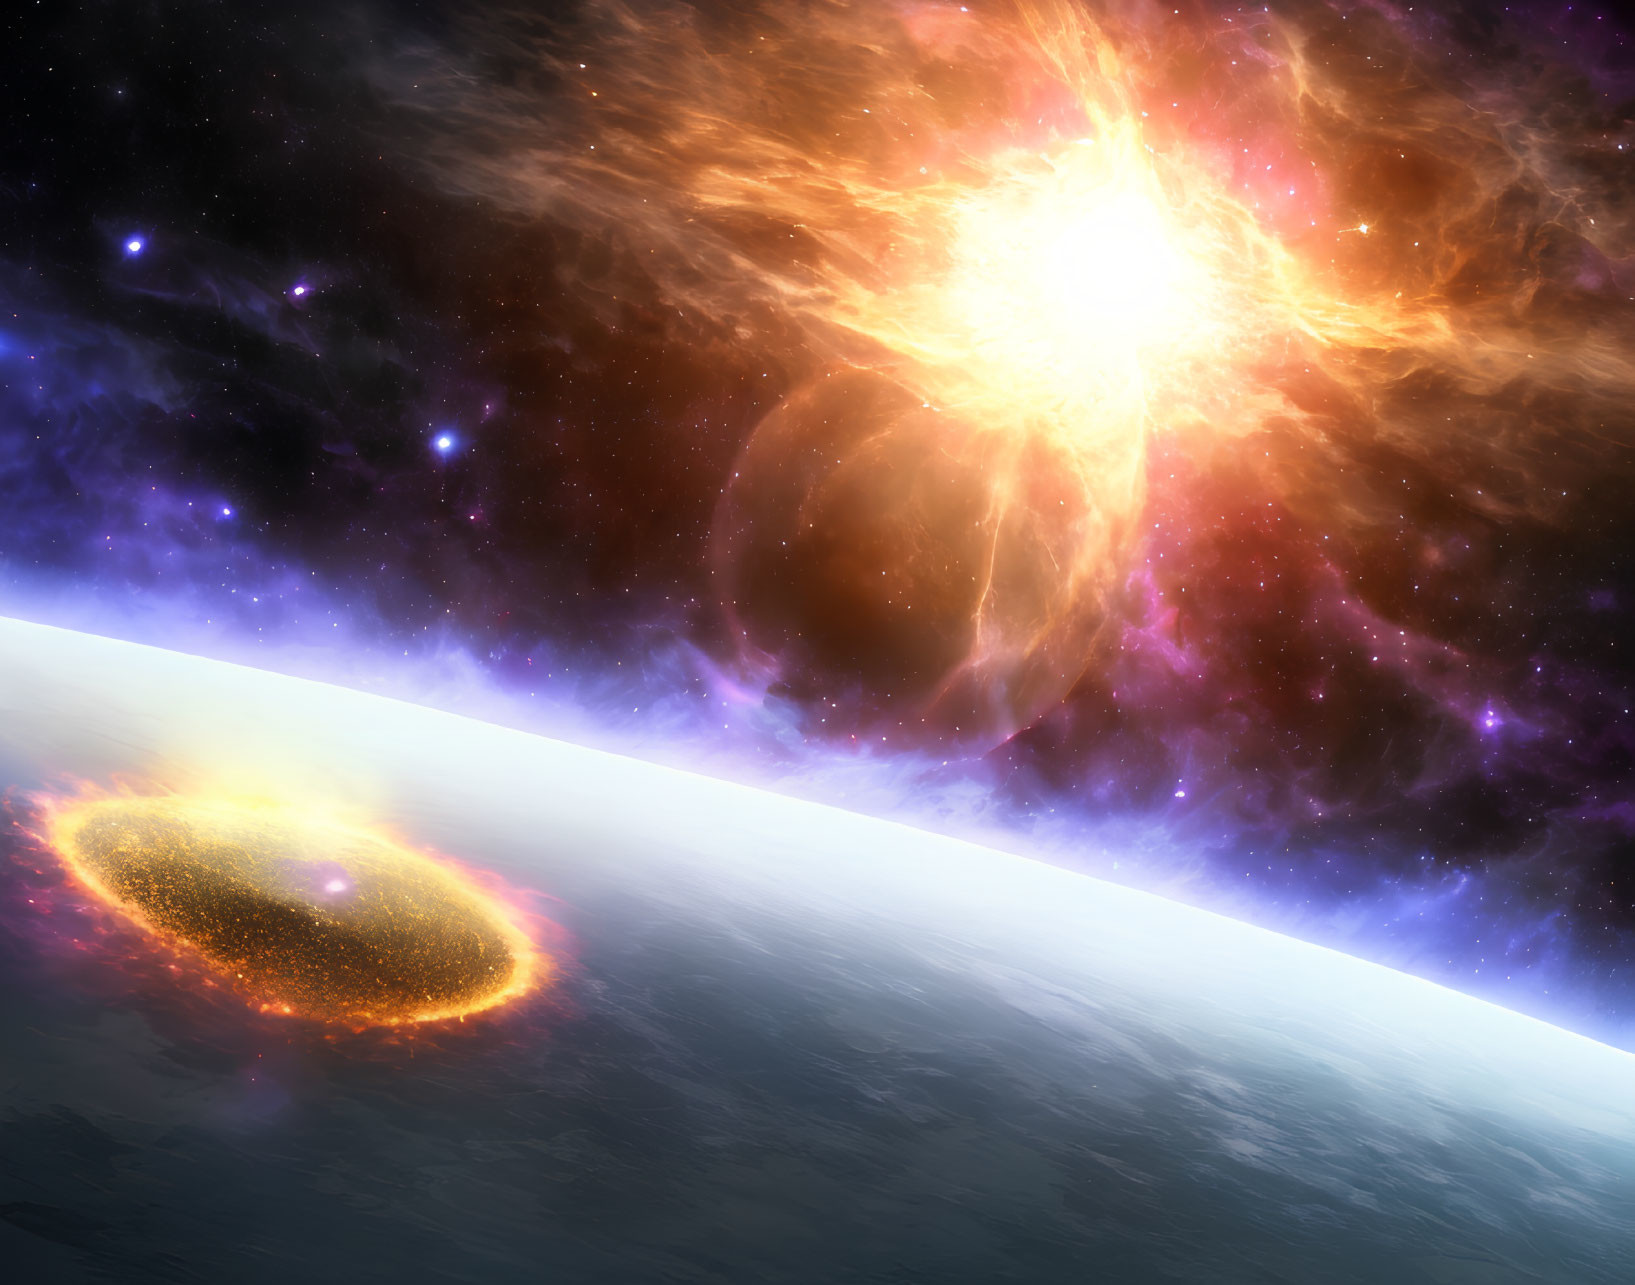 Vibrant Space Art: Supernova Explosion Approaching Planet